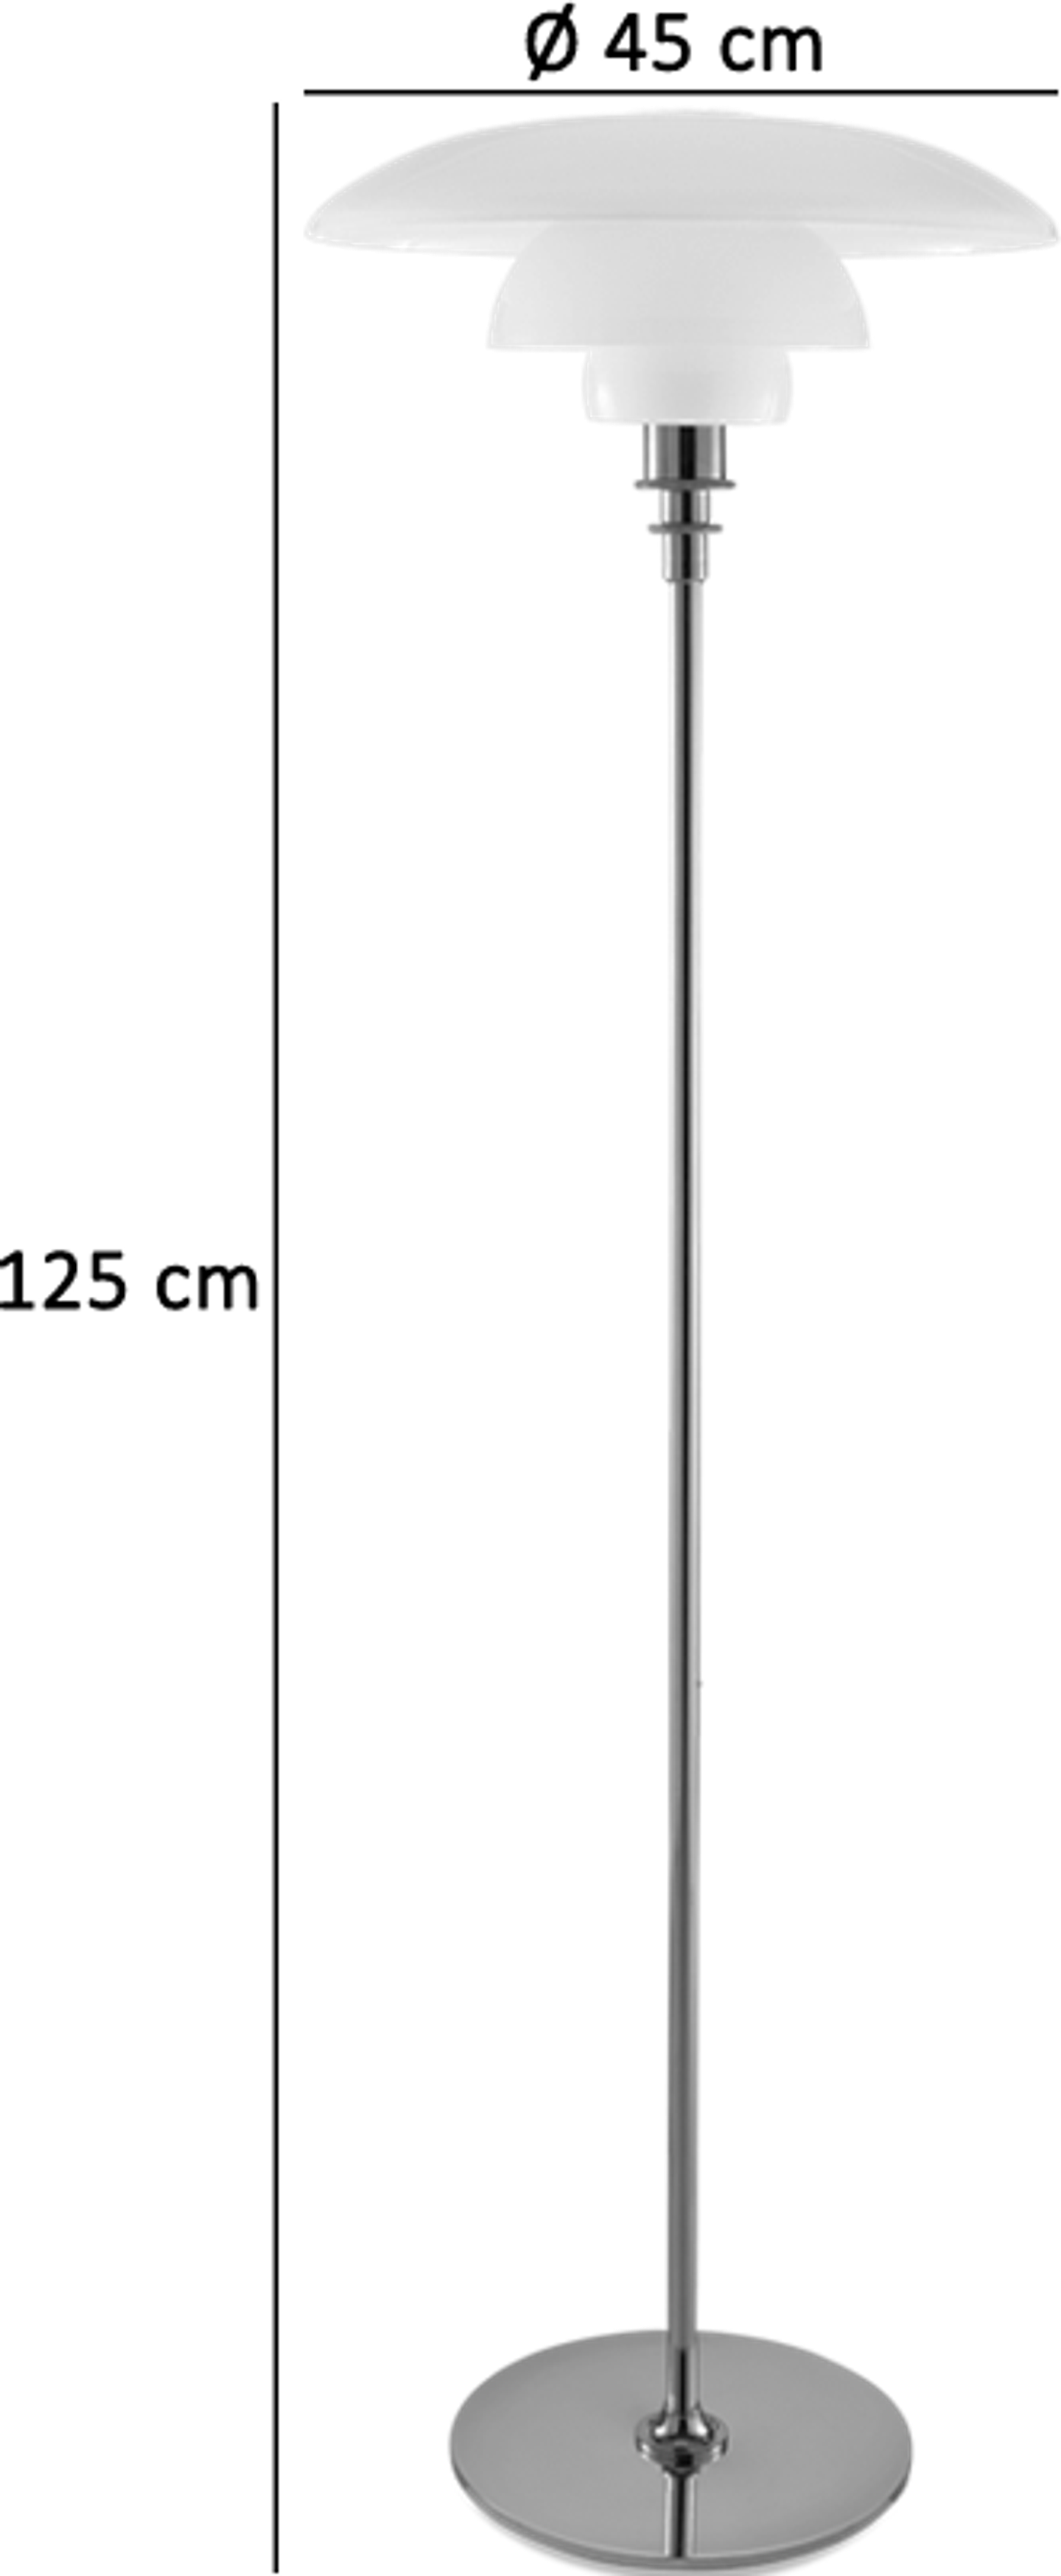 Lampada da terra alta PH 4,5 - 3,5 Style Chrome image.